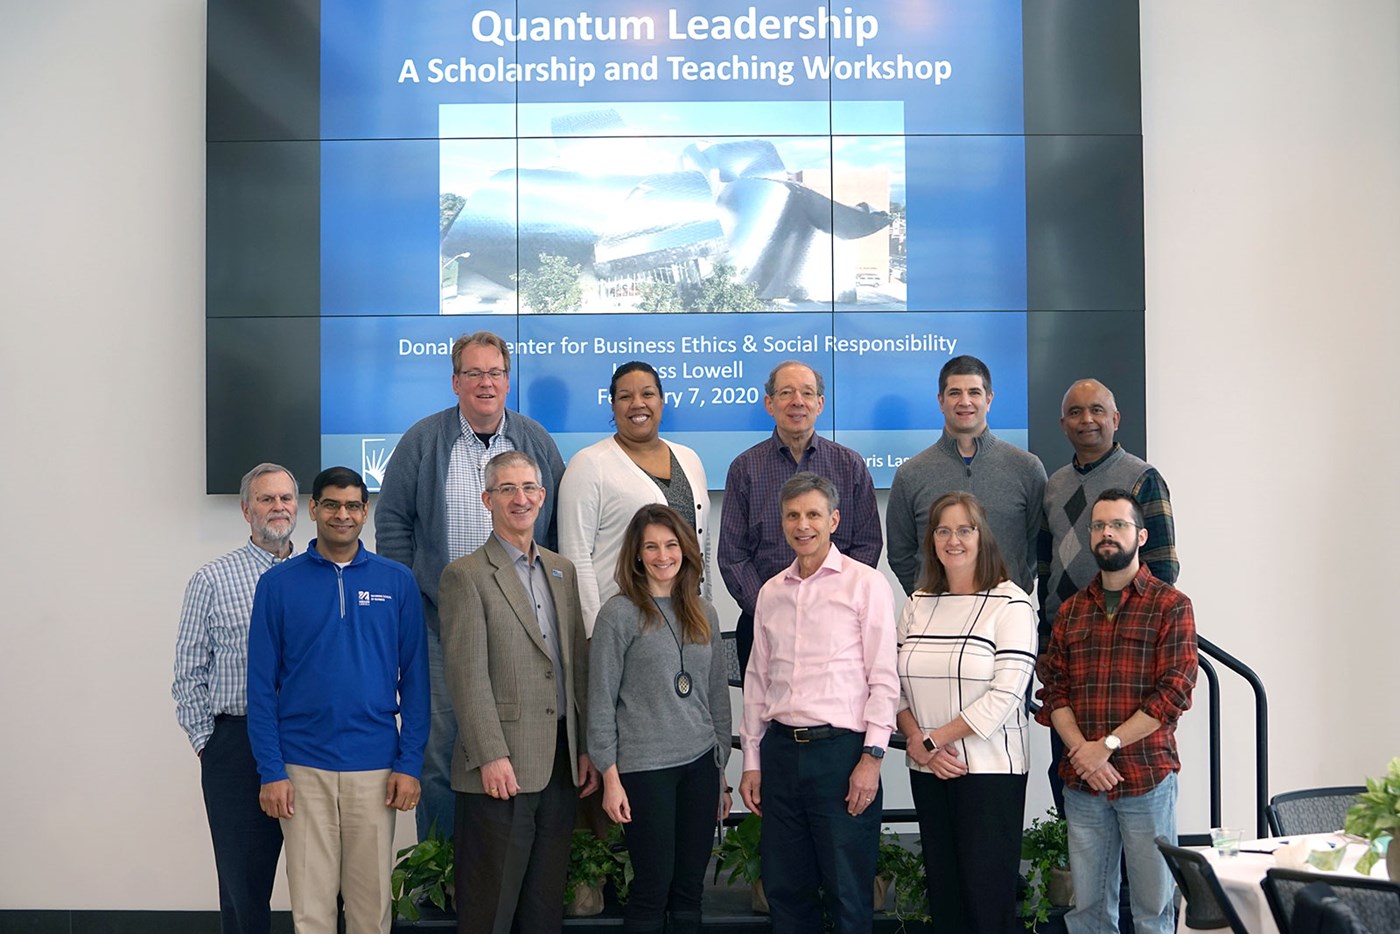 Group standing in front of slide for Quantum Leadership Workshop